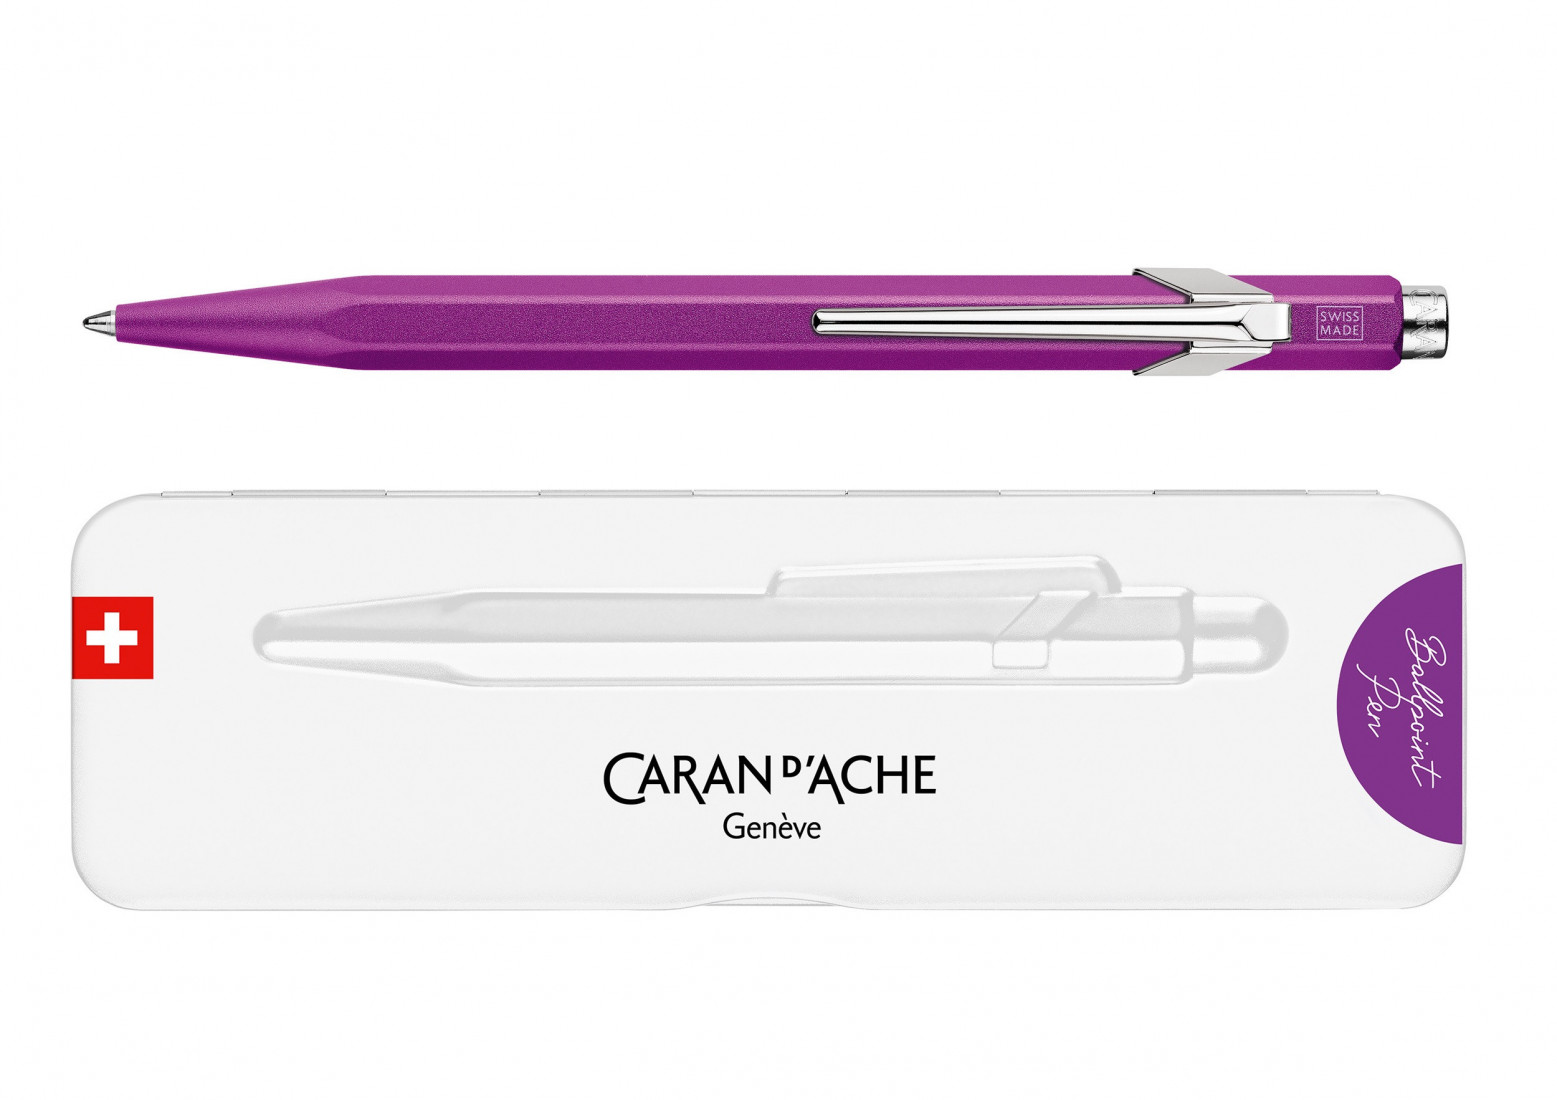 Caran Dache 849 metallic violet ballpoint pen, with slim metal box